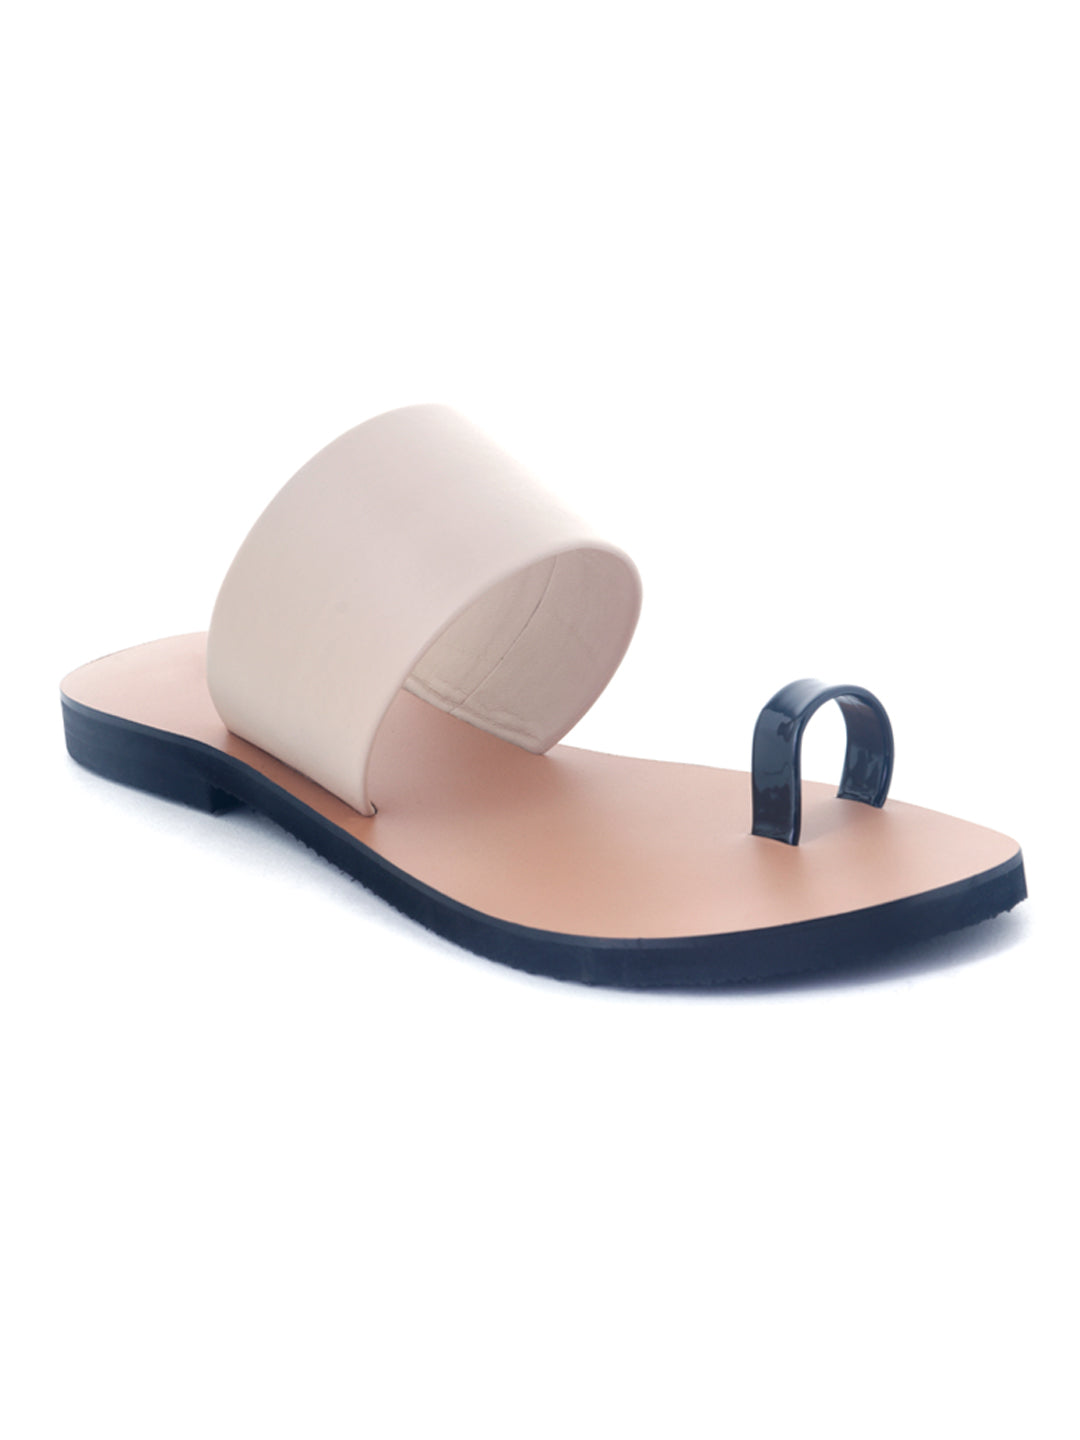 Beige Toe Ring Flat Sandals - Beige